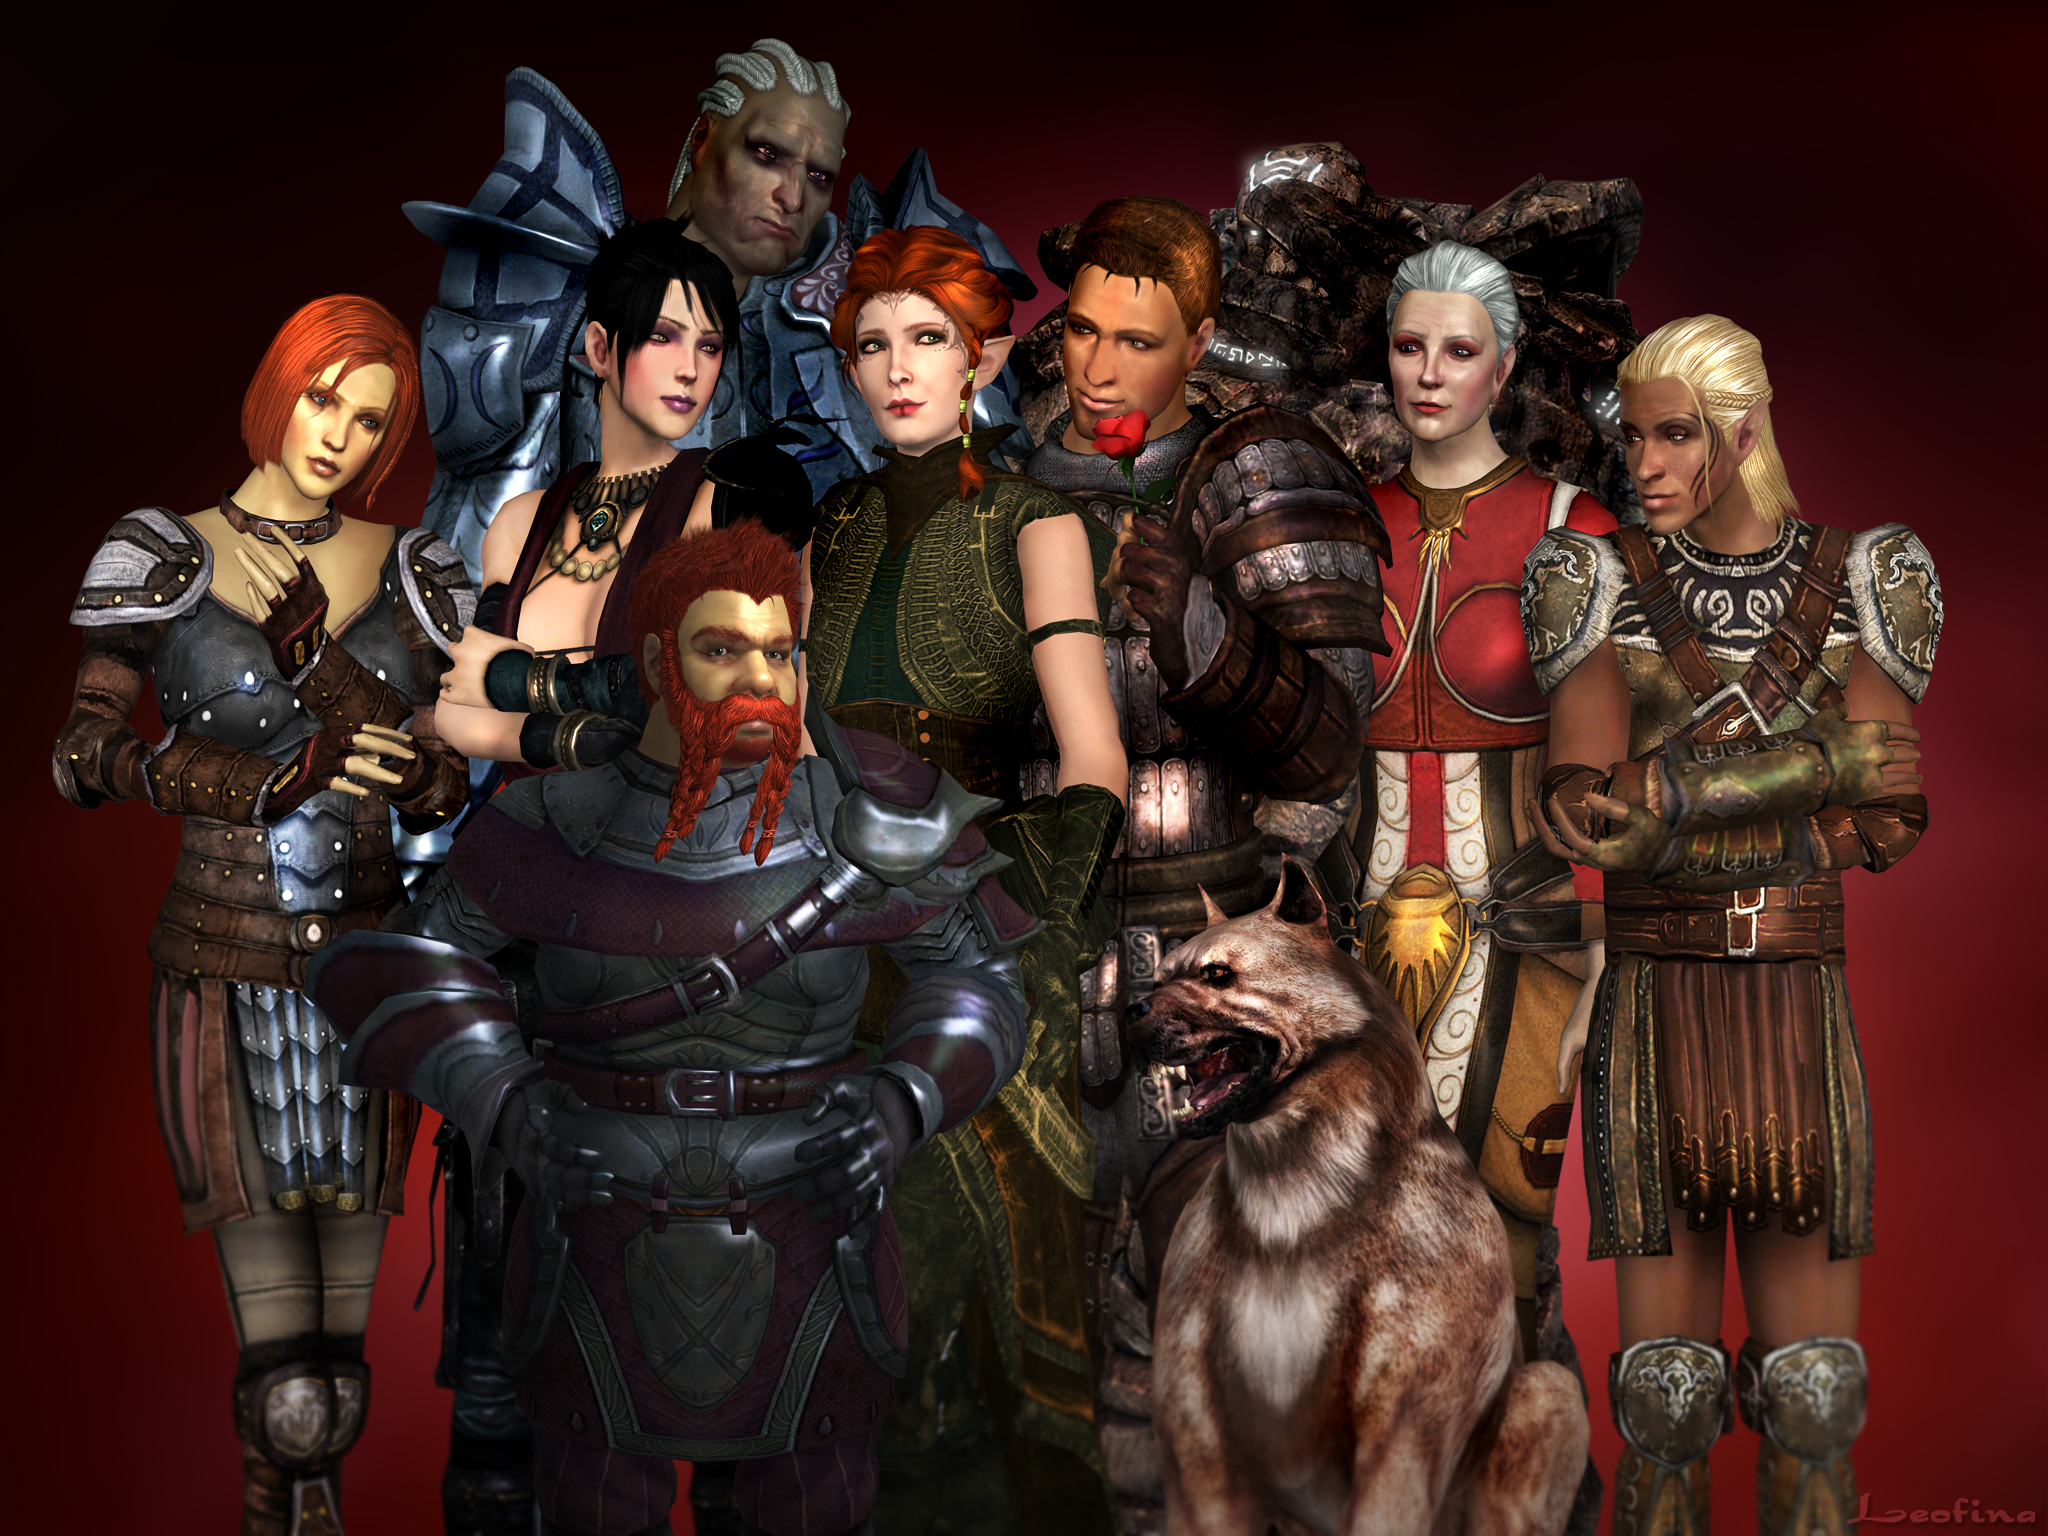 Dragon Age Origins Companions by desert77 on DeviantArt